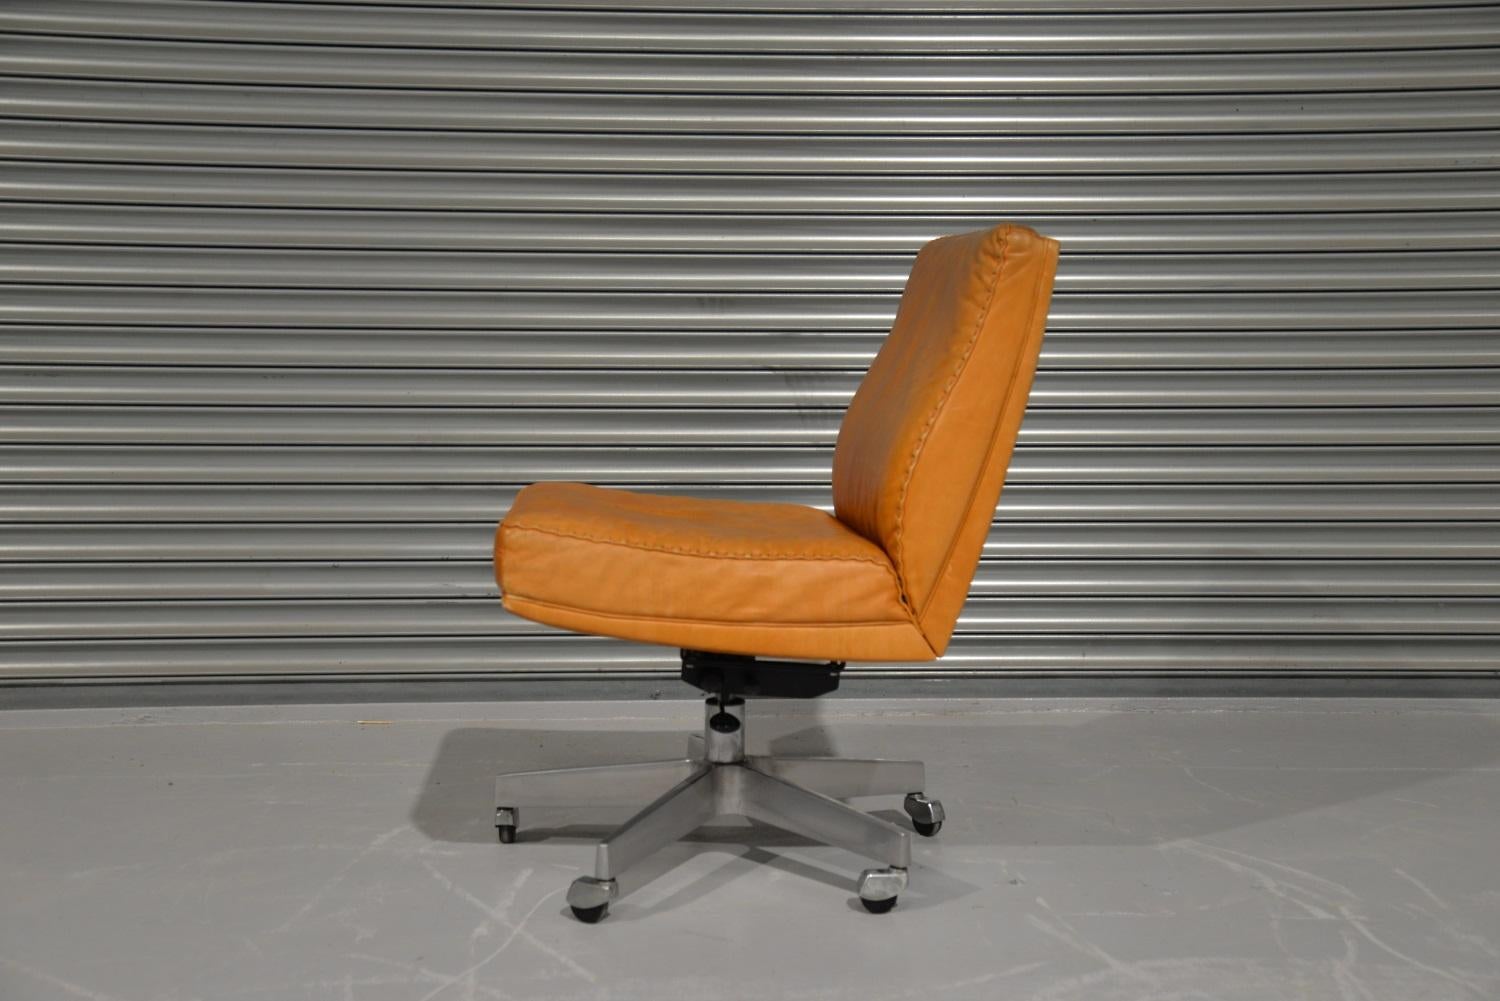 Vintage De Sede DS 35 Leather Swivel Office Chair on castors, Switzerland 1960s (Moderne der Mitte des Jahrhunderts)